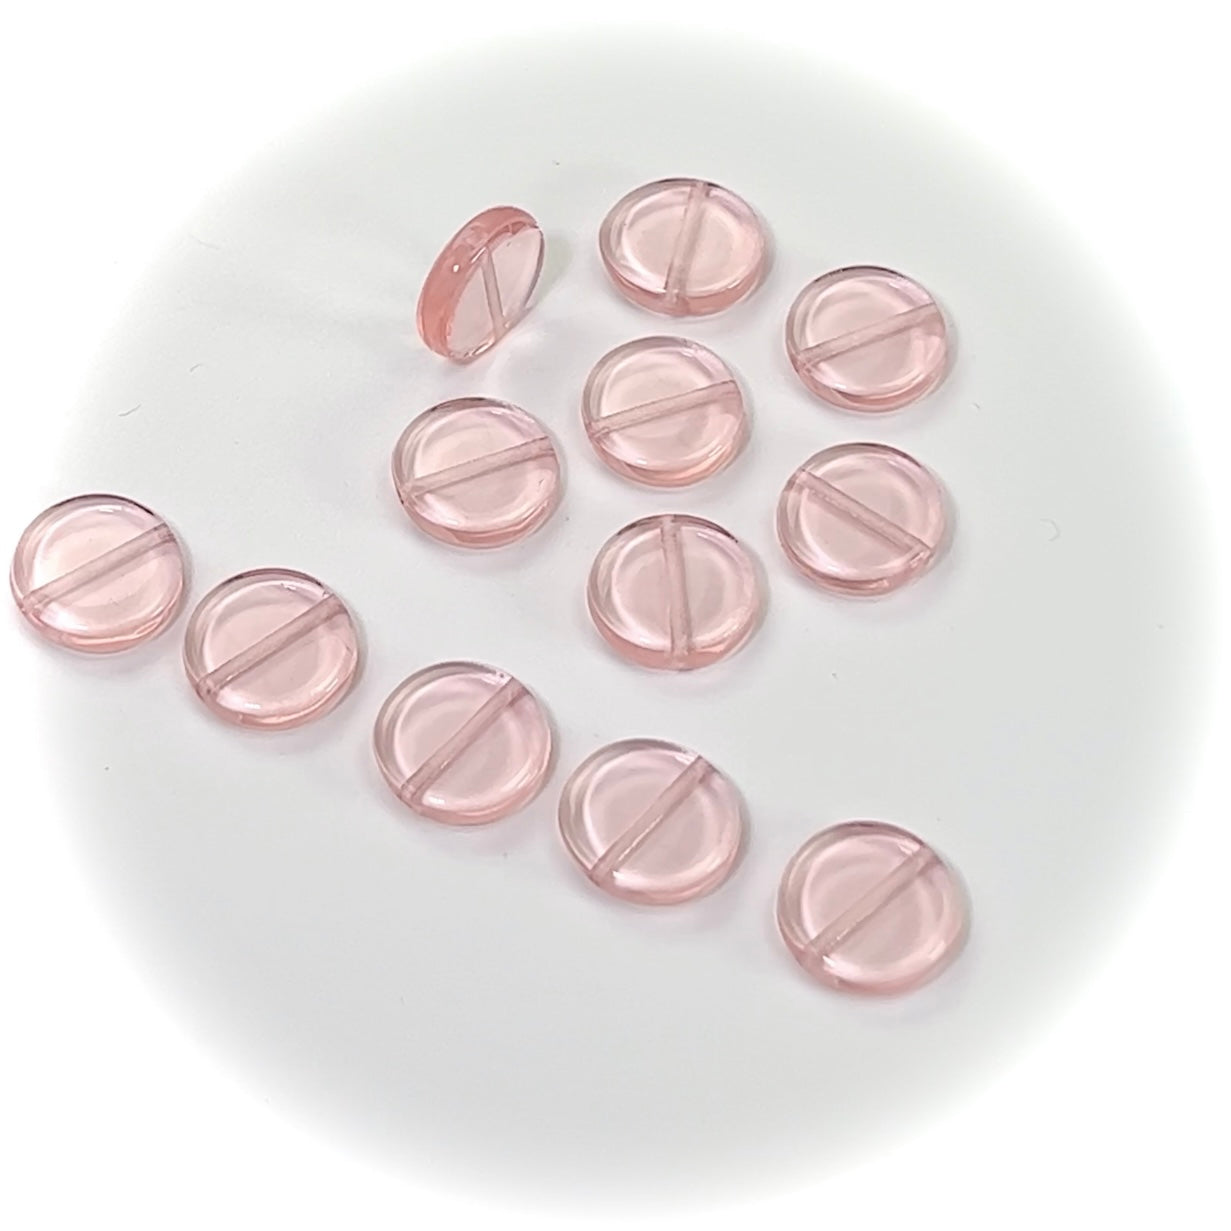 Czech Glass Druk Beads in size 12mm, Flat Disc, Rosaline pink color, 50pcs, J079